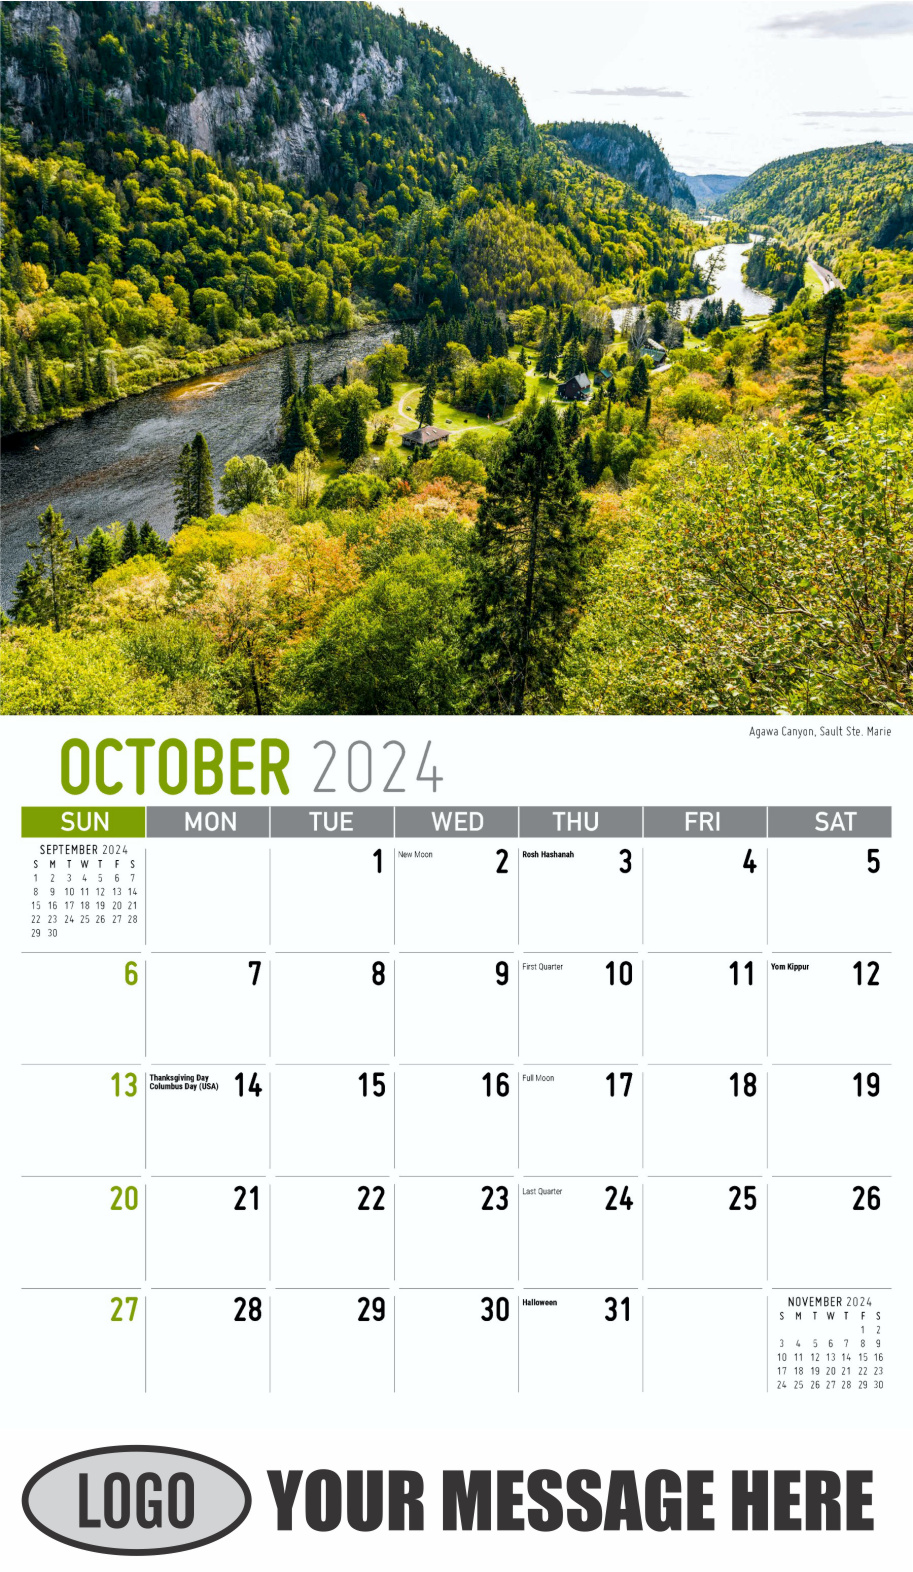 Scenes of Ontario 2024 Business Promo Wall Calendar - October